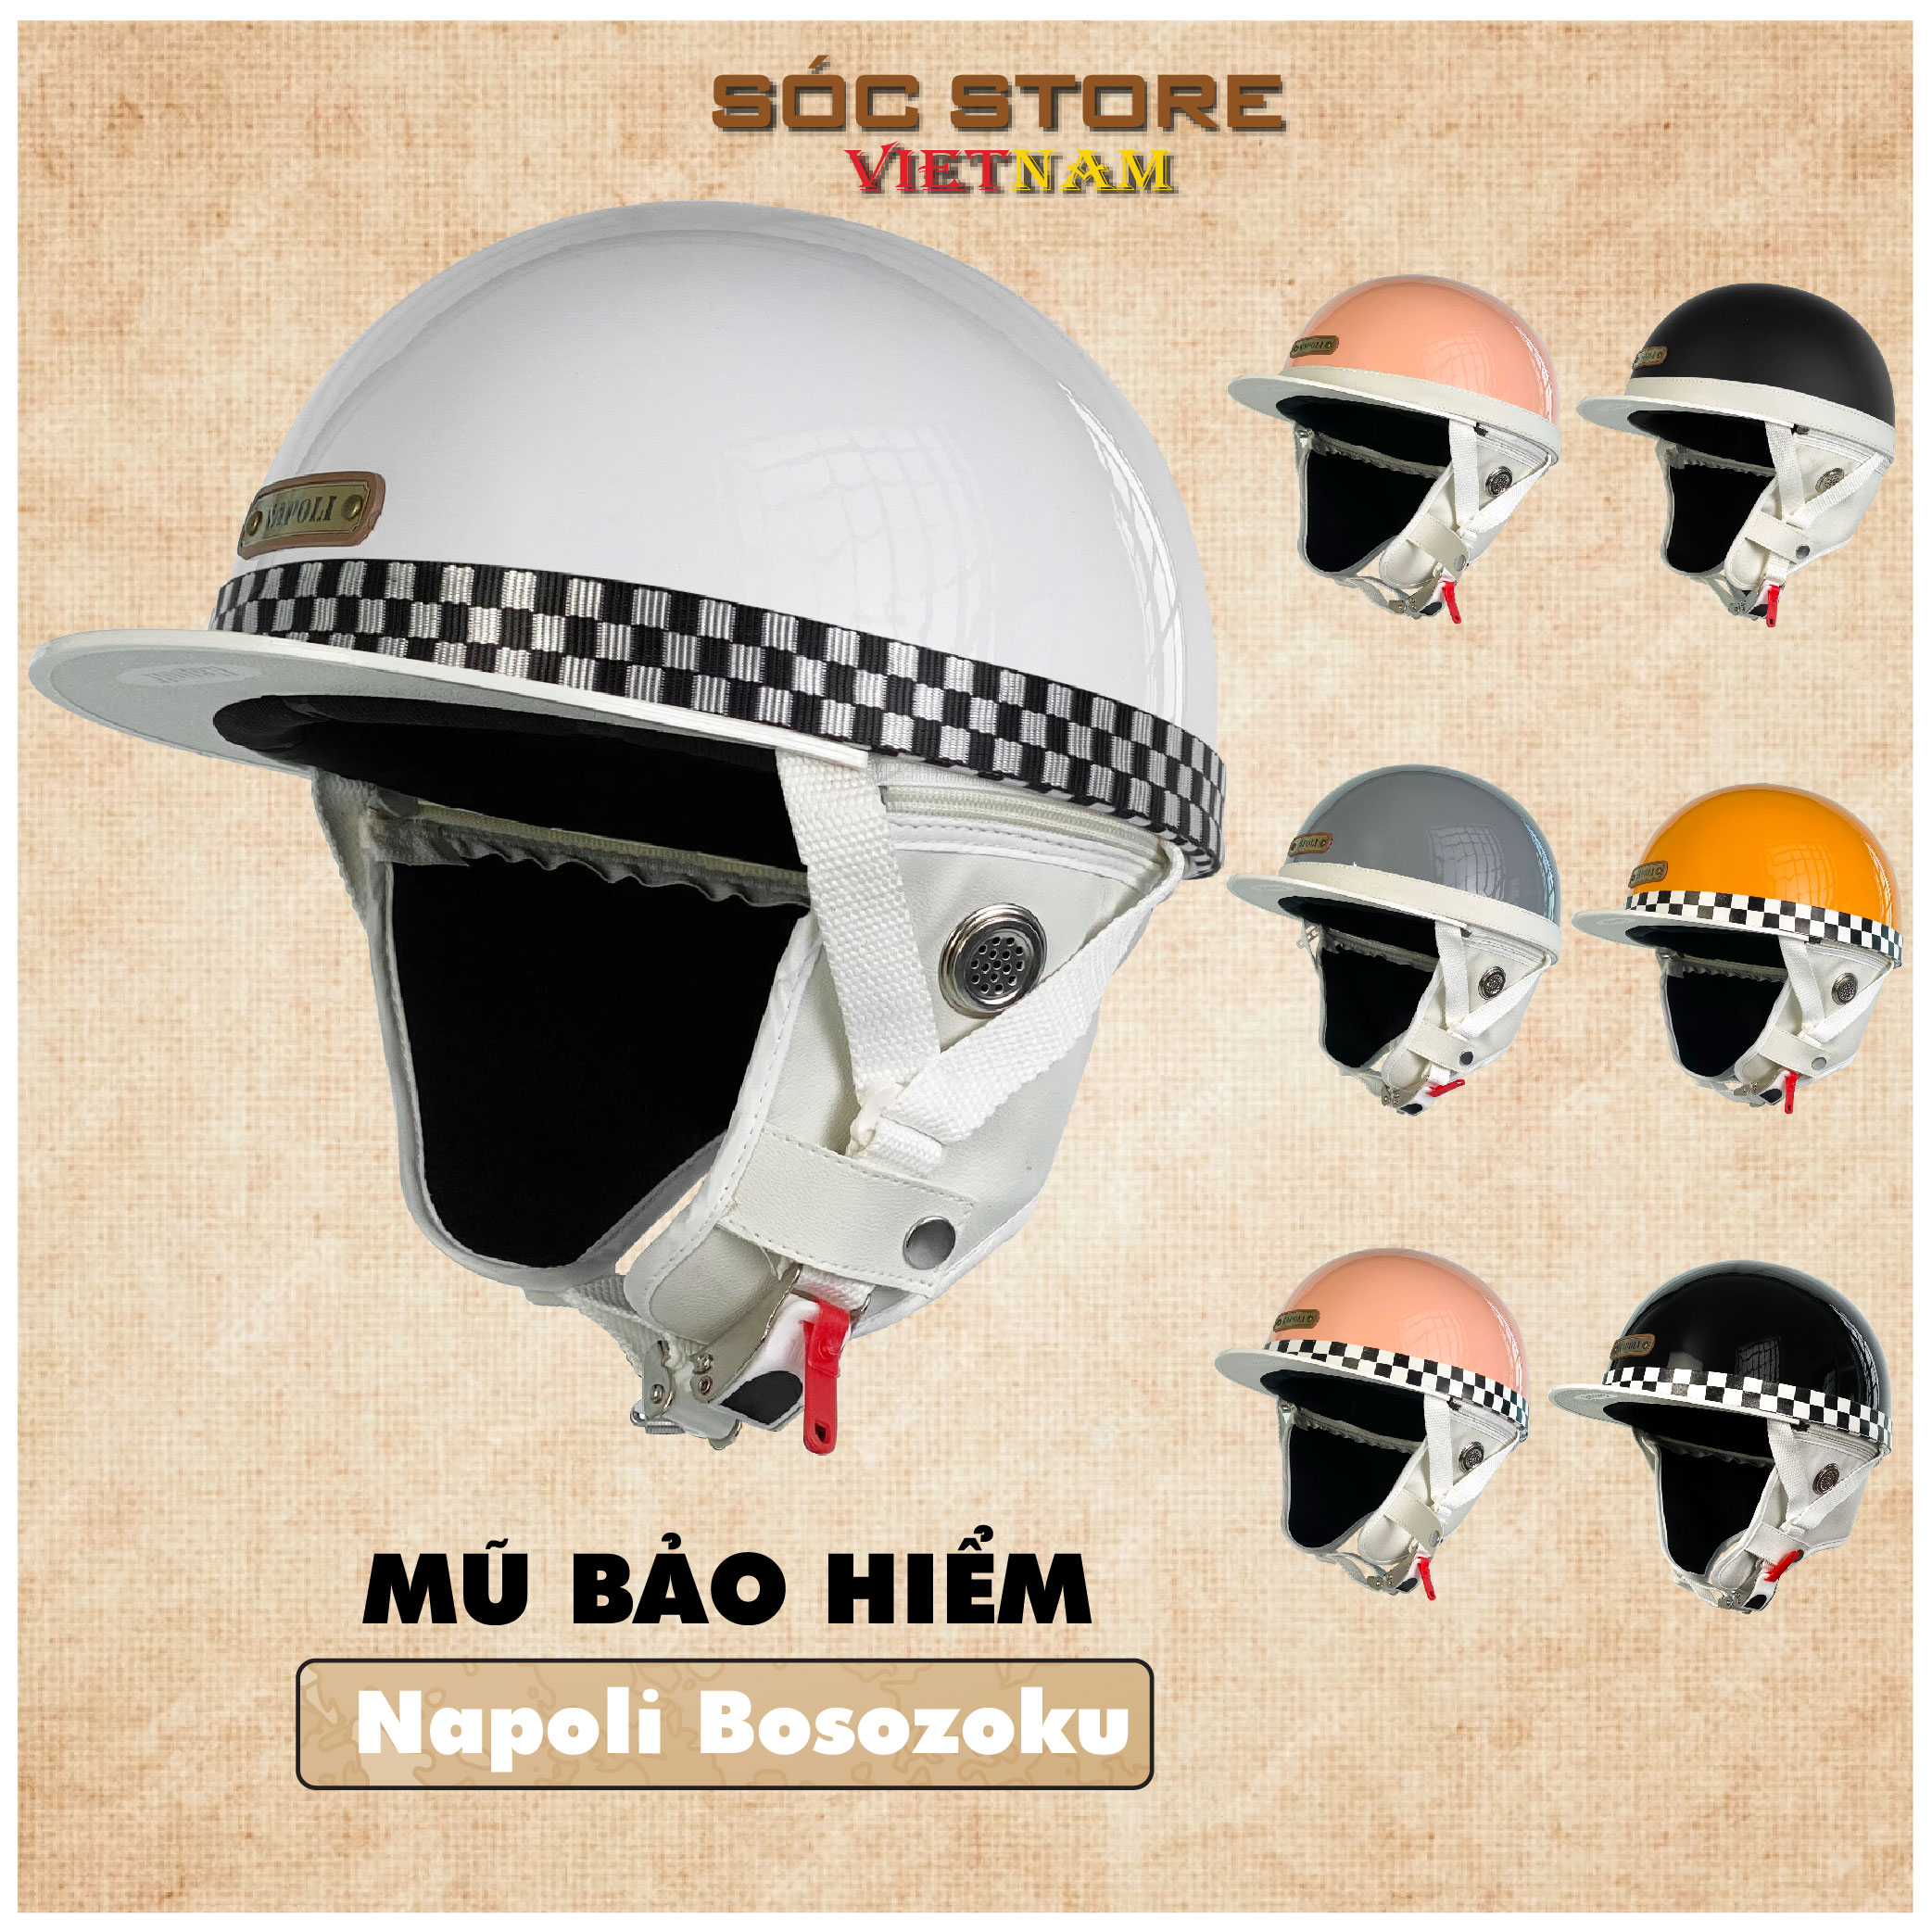 Mũ bảo hiểm nửa đầu Napoli Bosozoku Japan Style, nón bảo hiểm Napoli Vintage lưỡi trai Sóc Store Vietnam